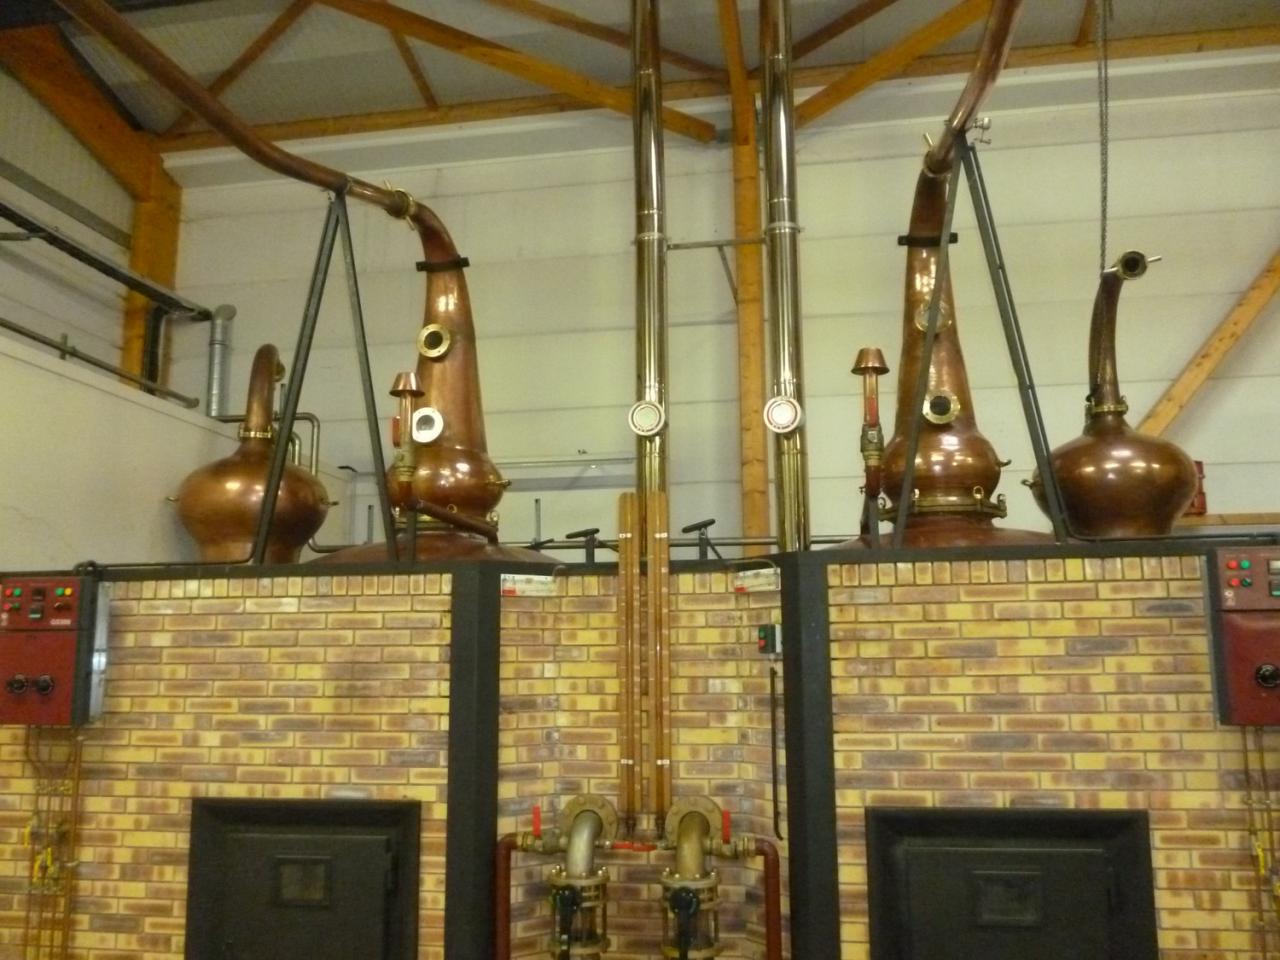 Distillerie des Menhirs